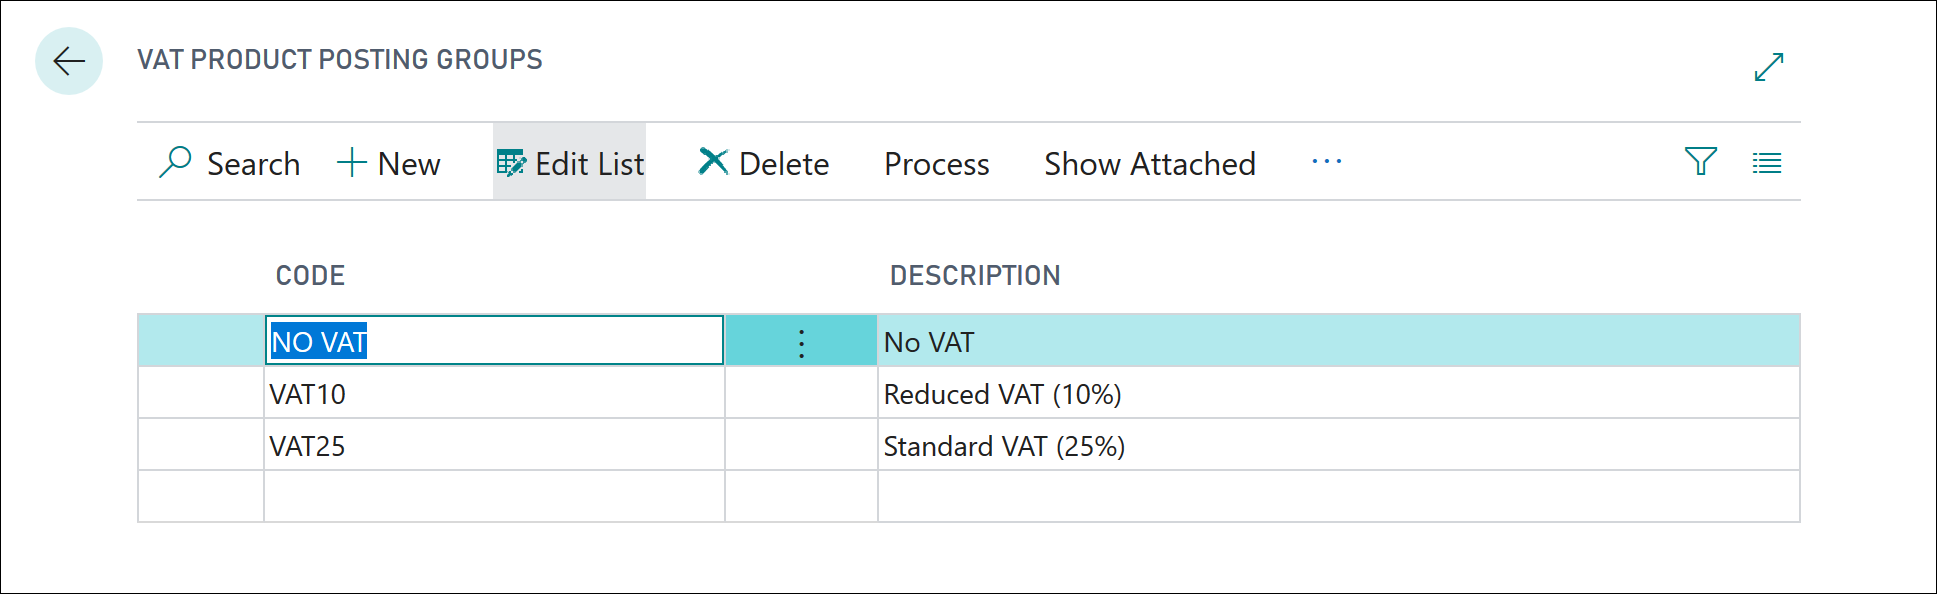 Screenshot of the VAT Product Posting Groups window.